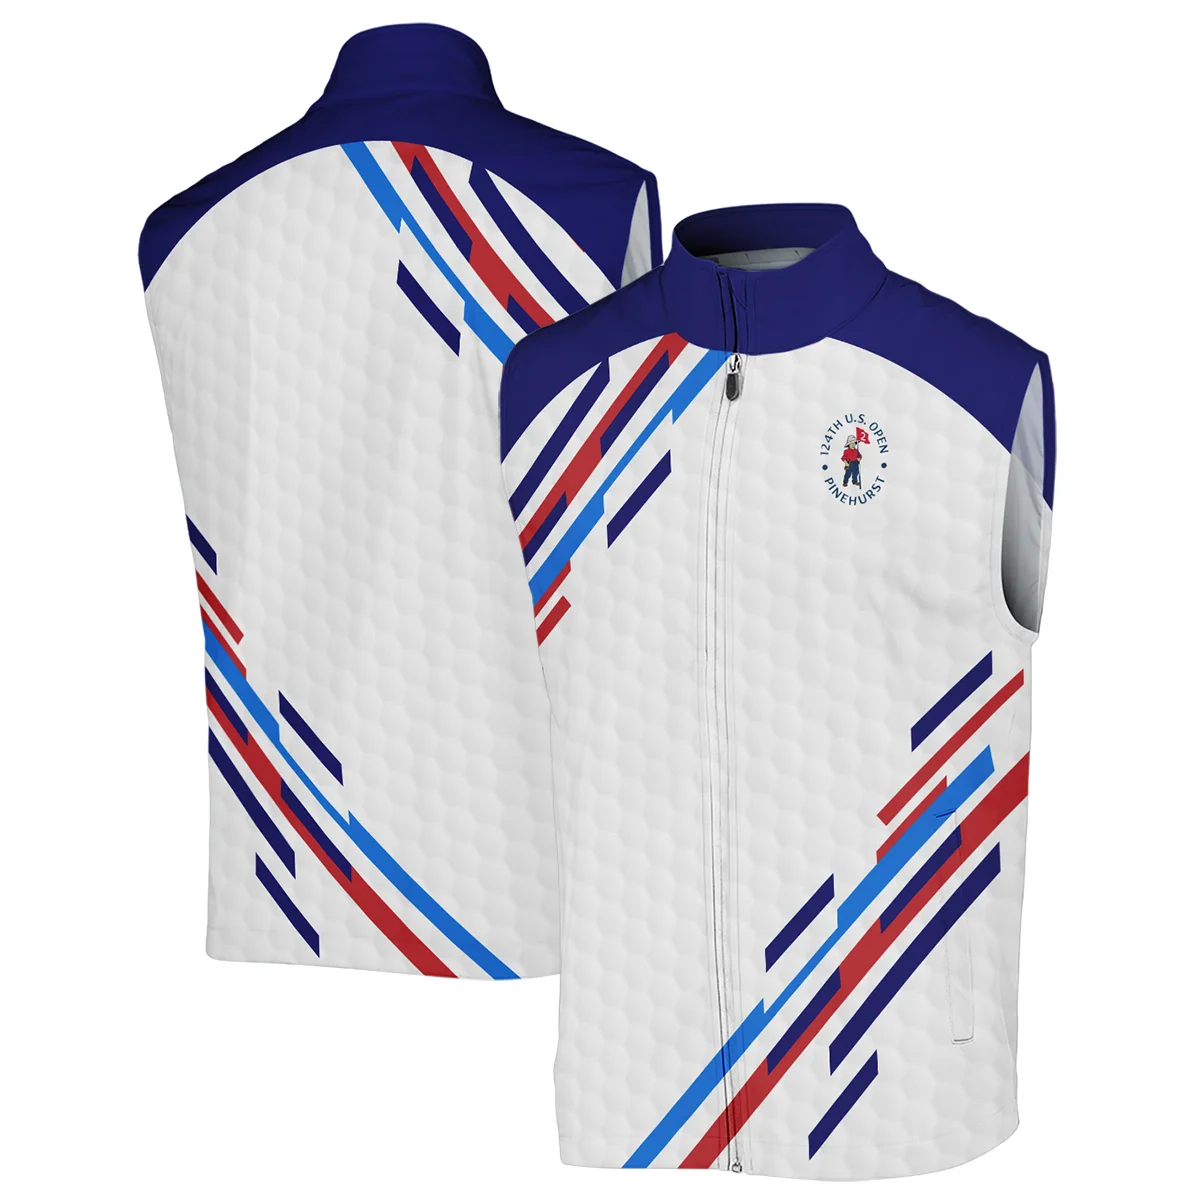 Golf Sport Callaway 124th U.S. Open Pinehurst Polo Shirt Blue Red Golf Pattern White All Over Print Polo Shirt For Men